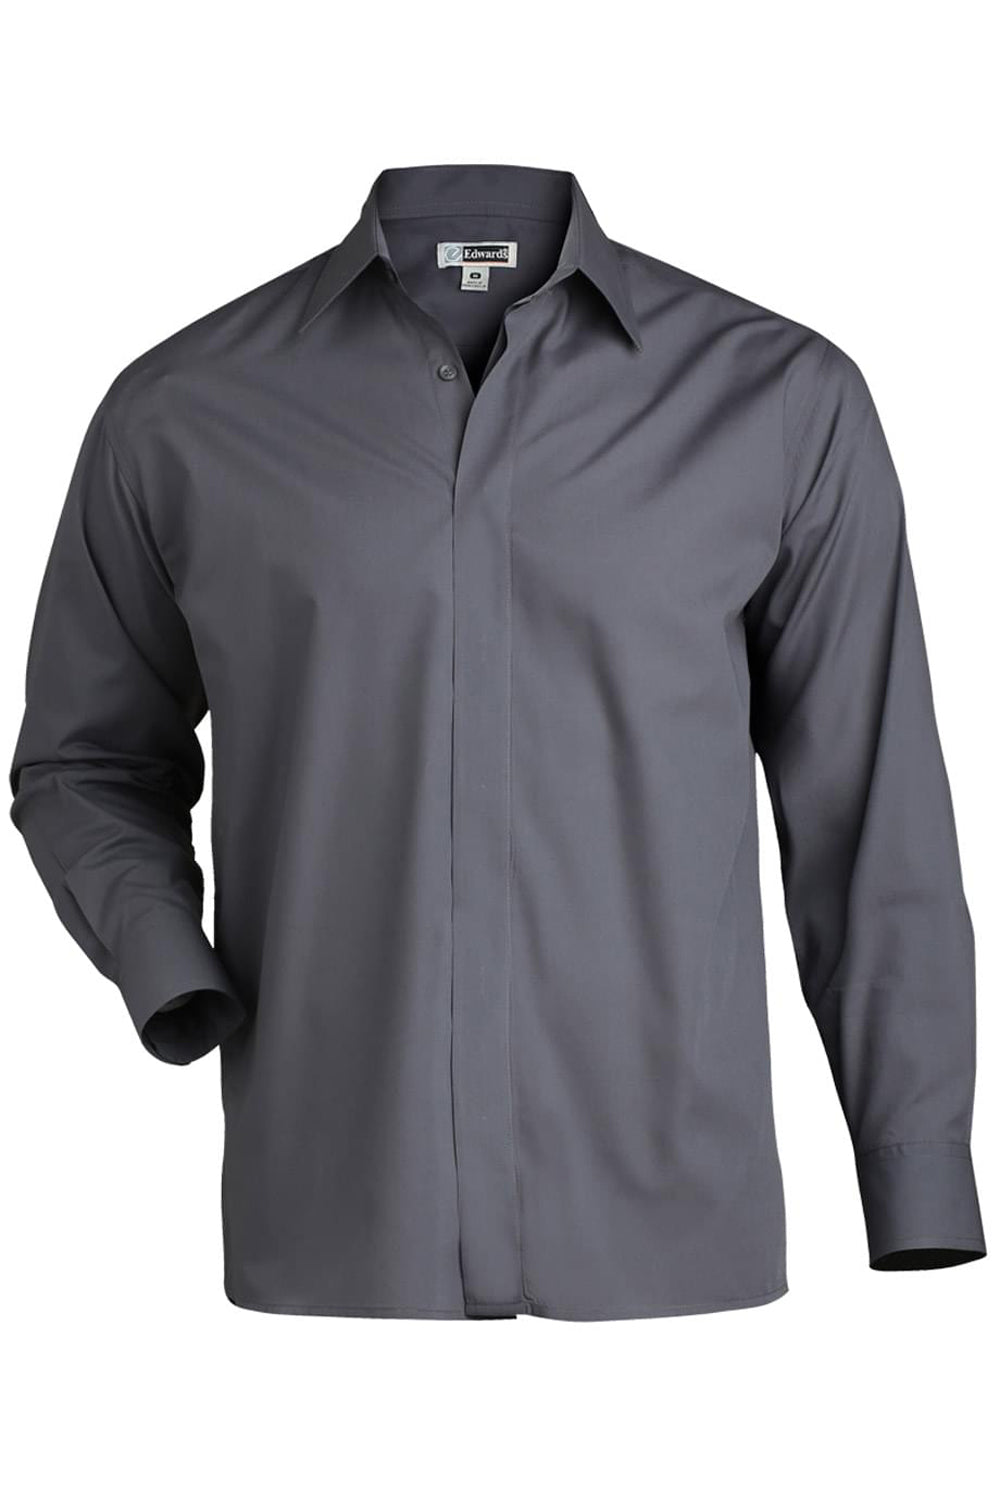 Edwards S / Regular Men's Café Broadcloth Shirt - Dark Grey